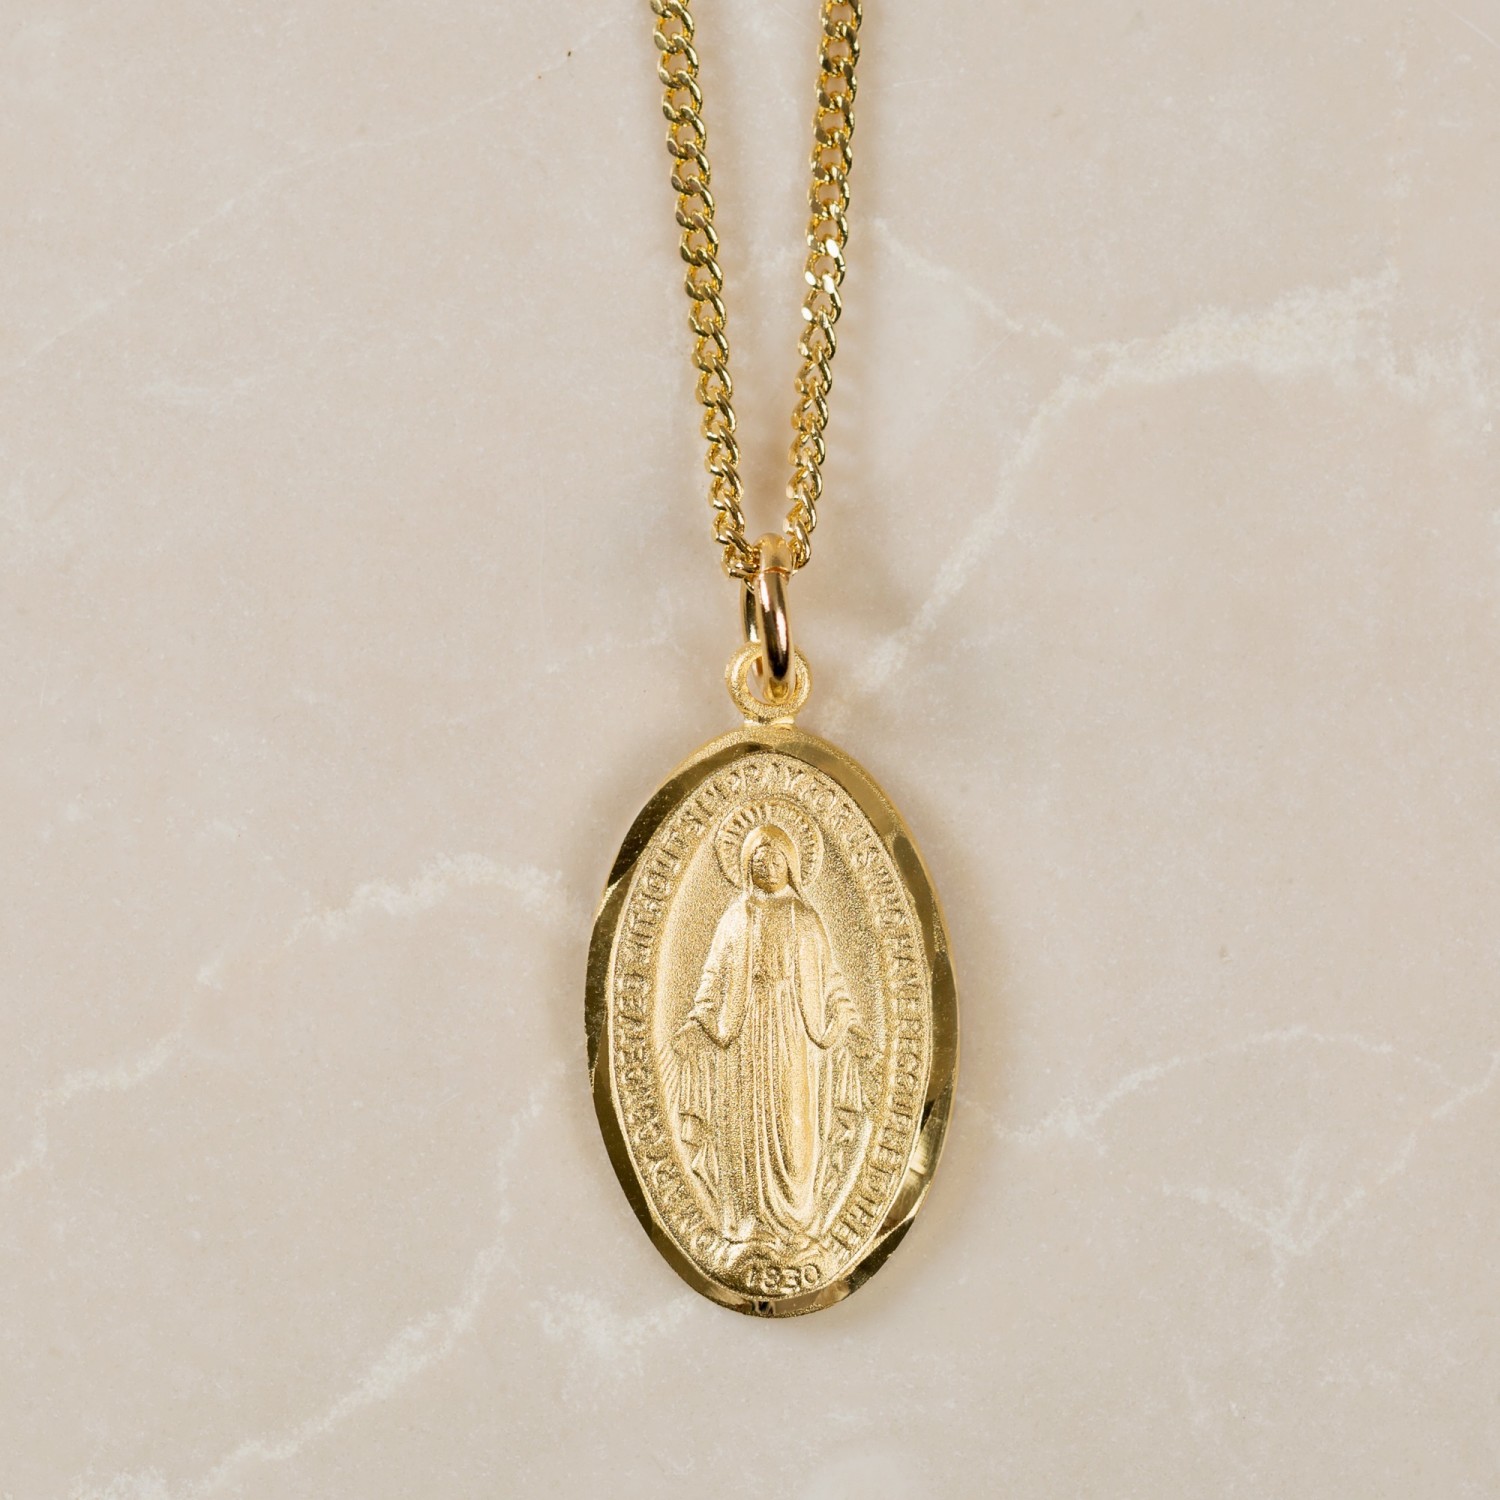 Pin auf Catholic jewelry necklace